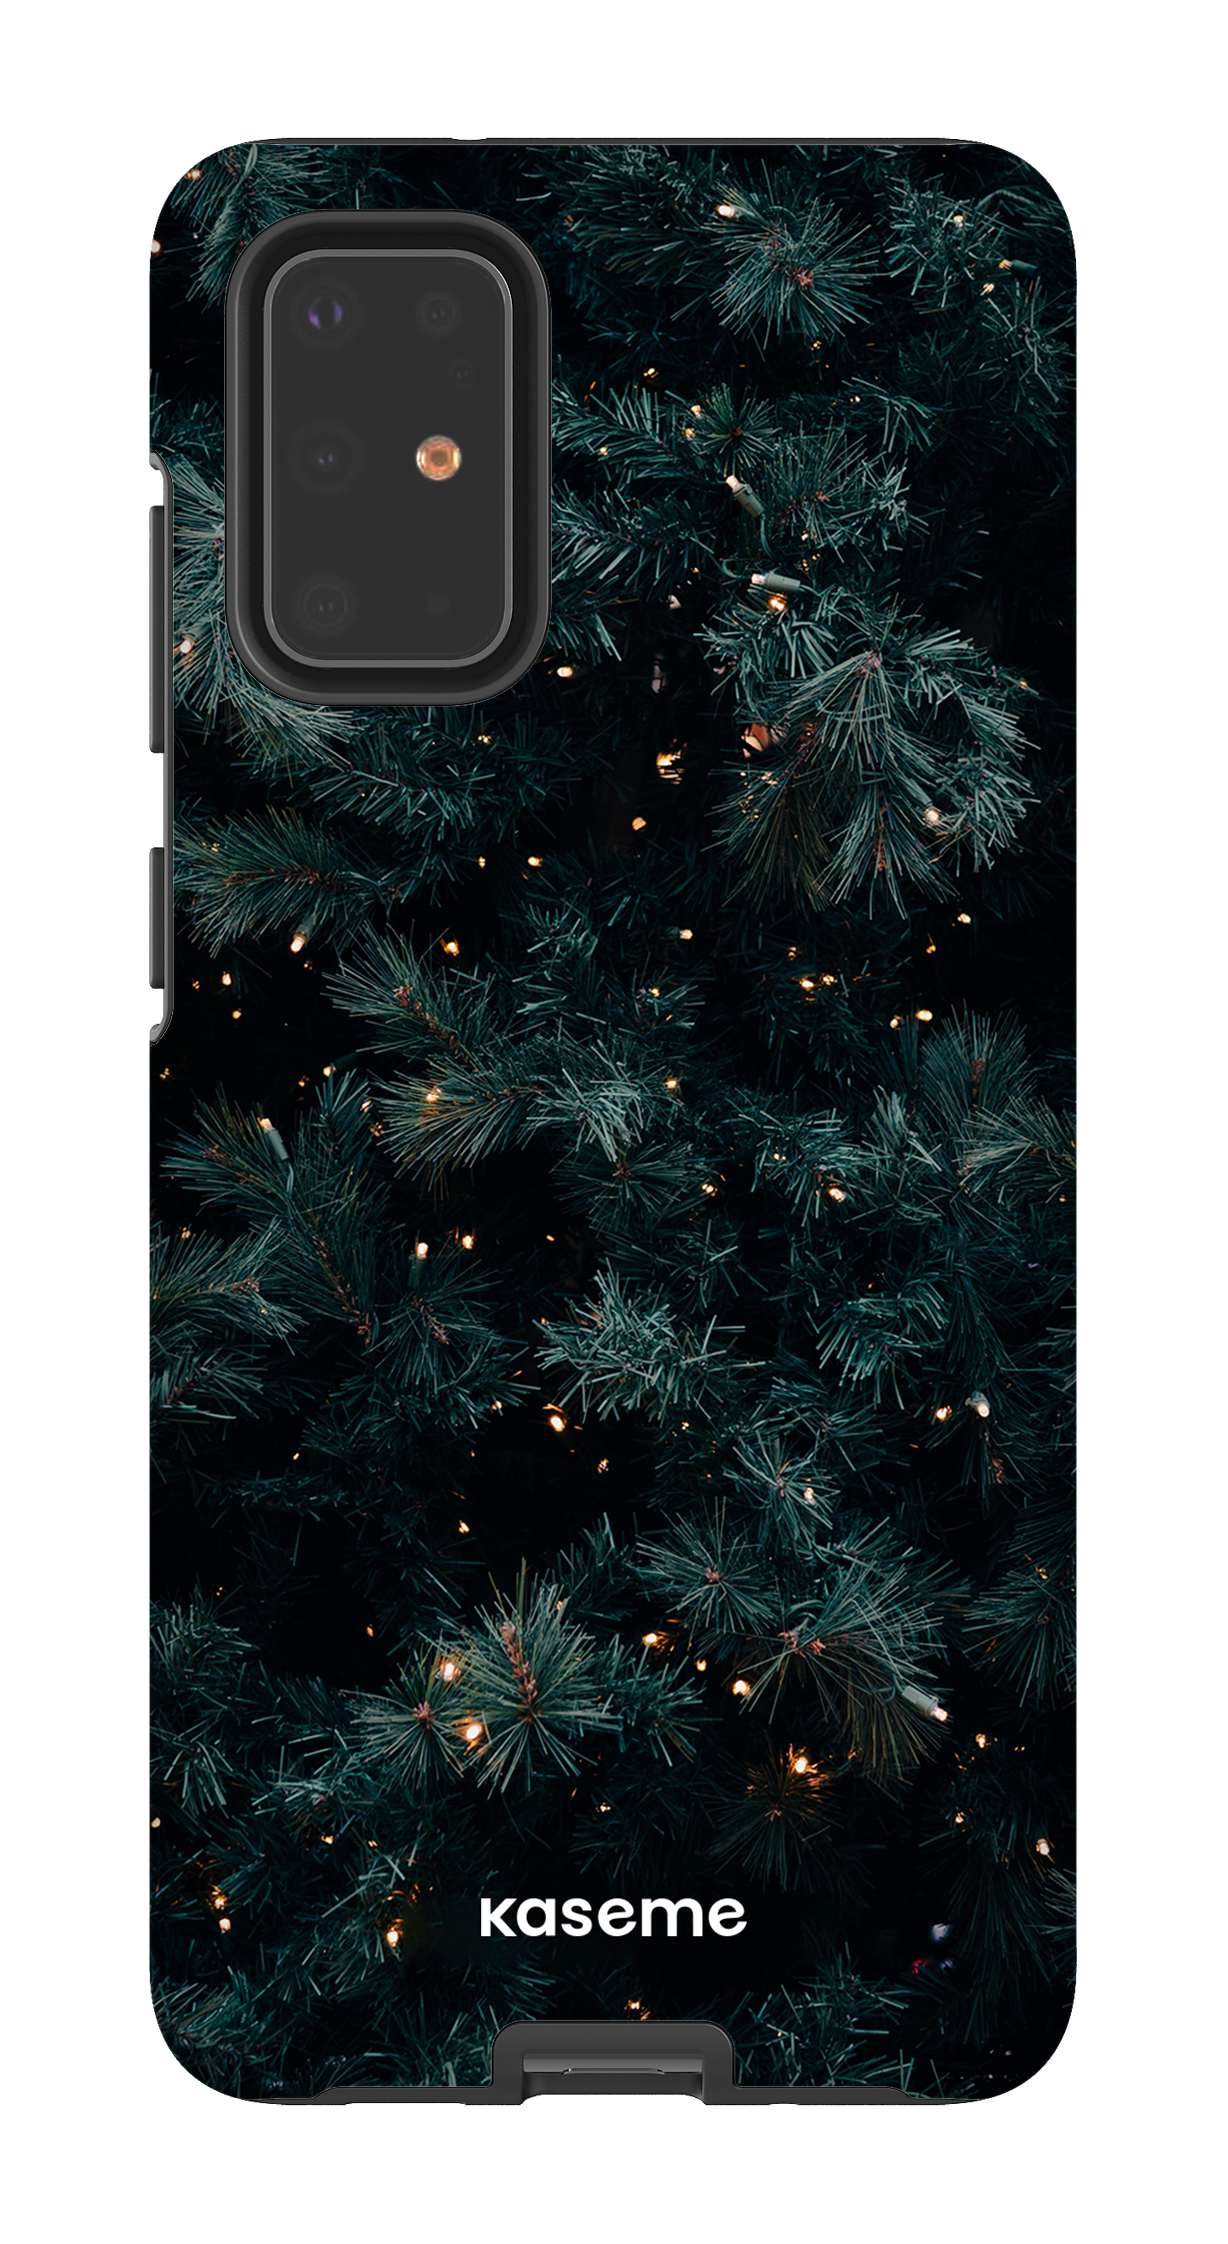 Holidays - Galaxy S20 Plus